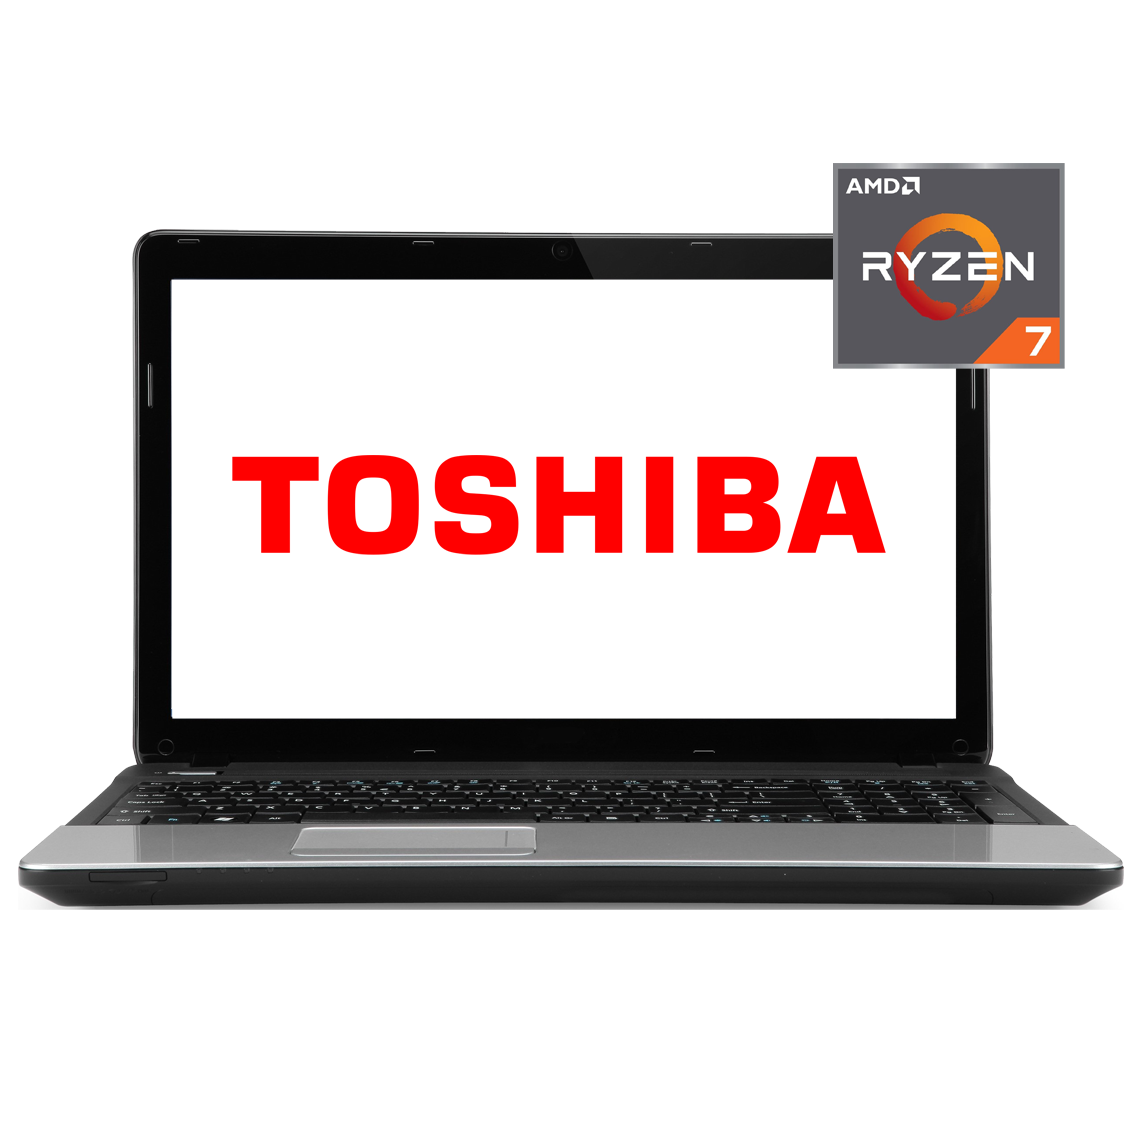 Toshiba - 13.3 inch AMD Ryzen 7